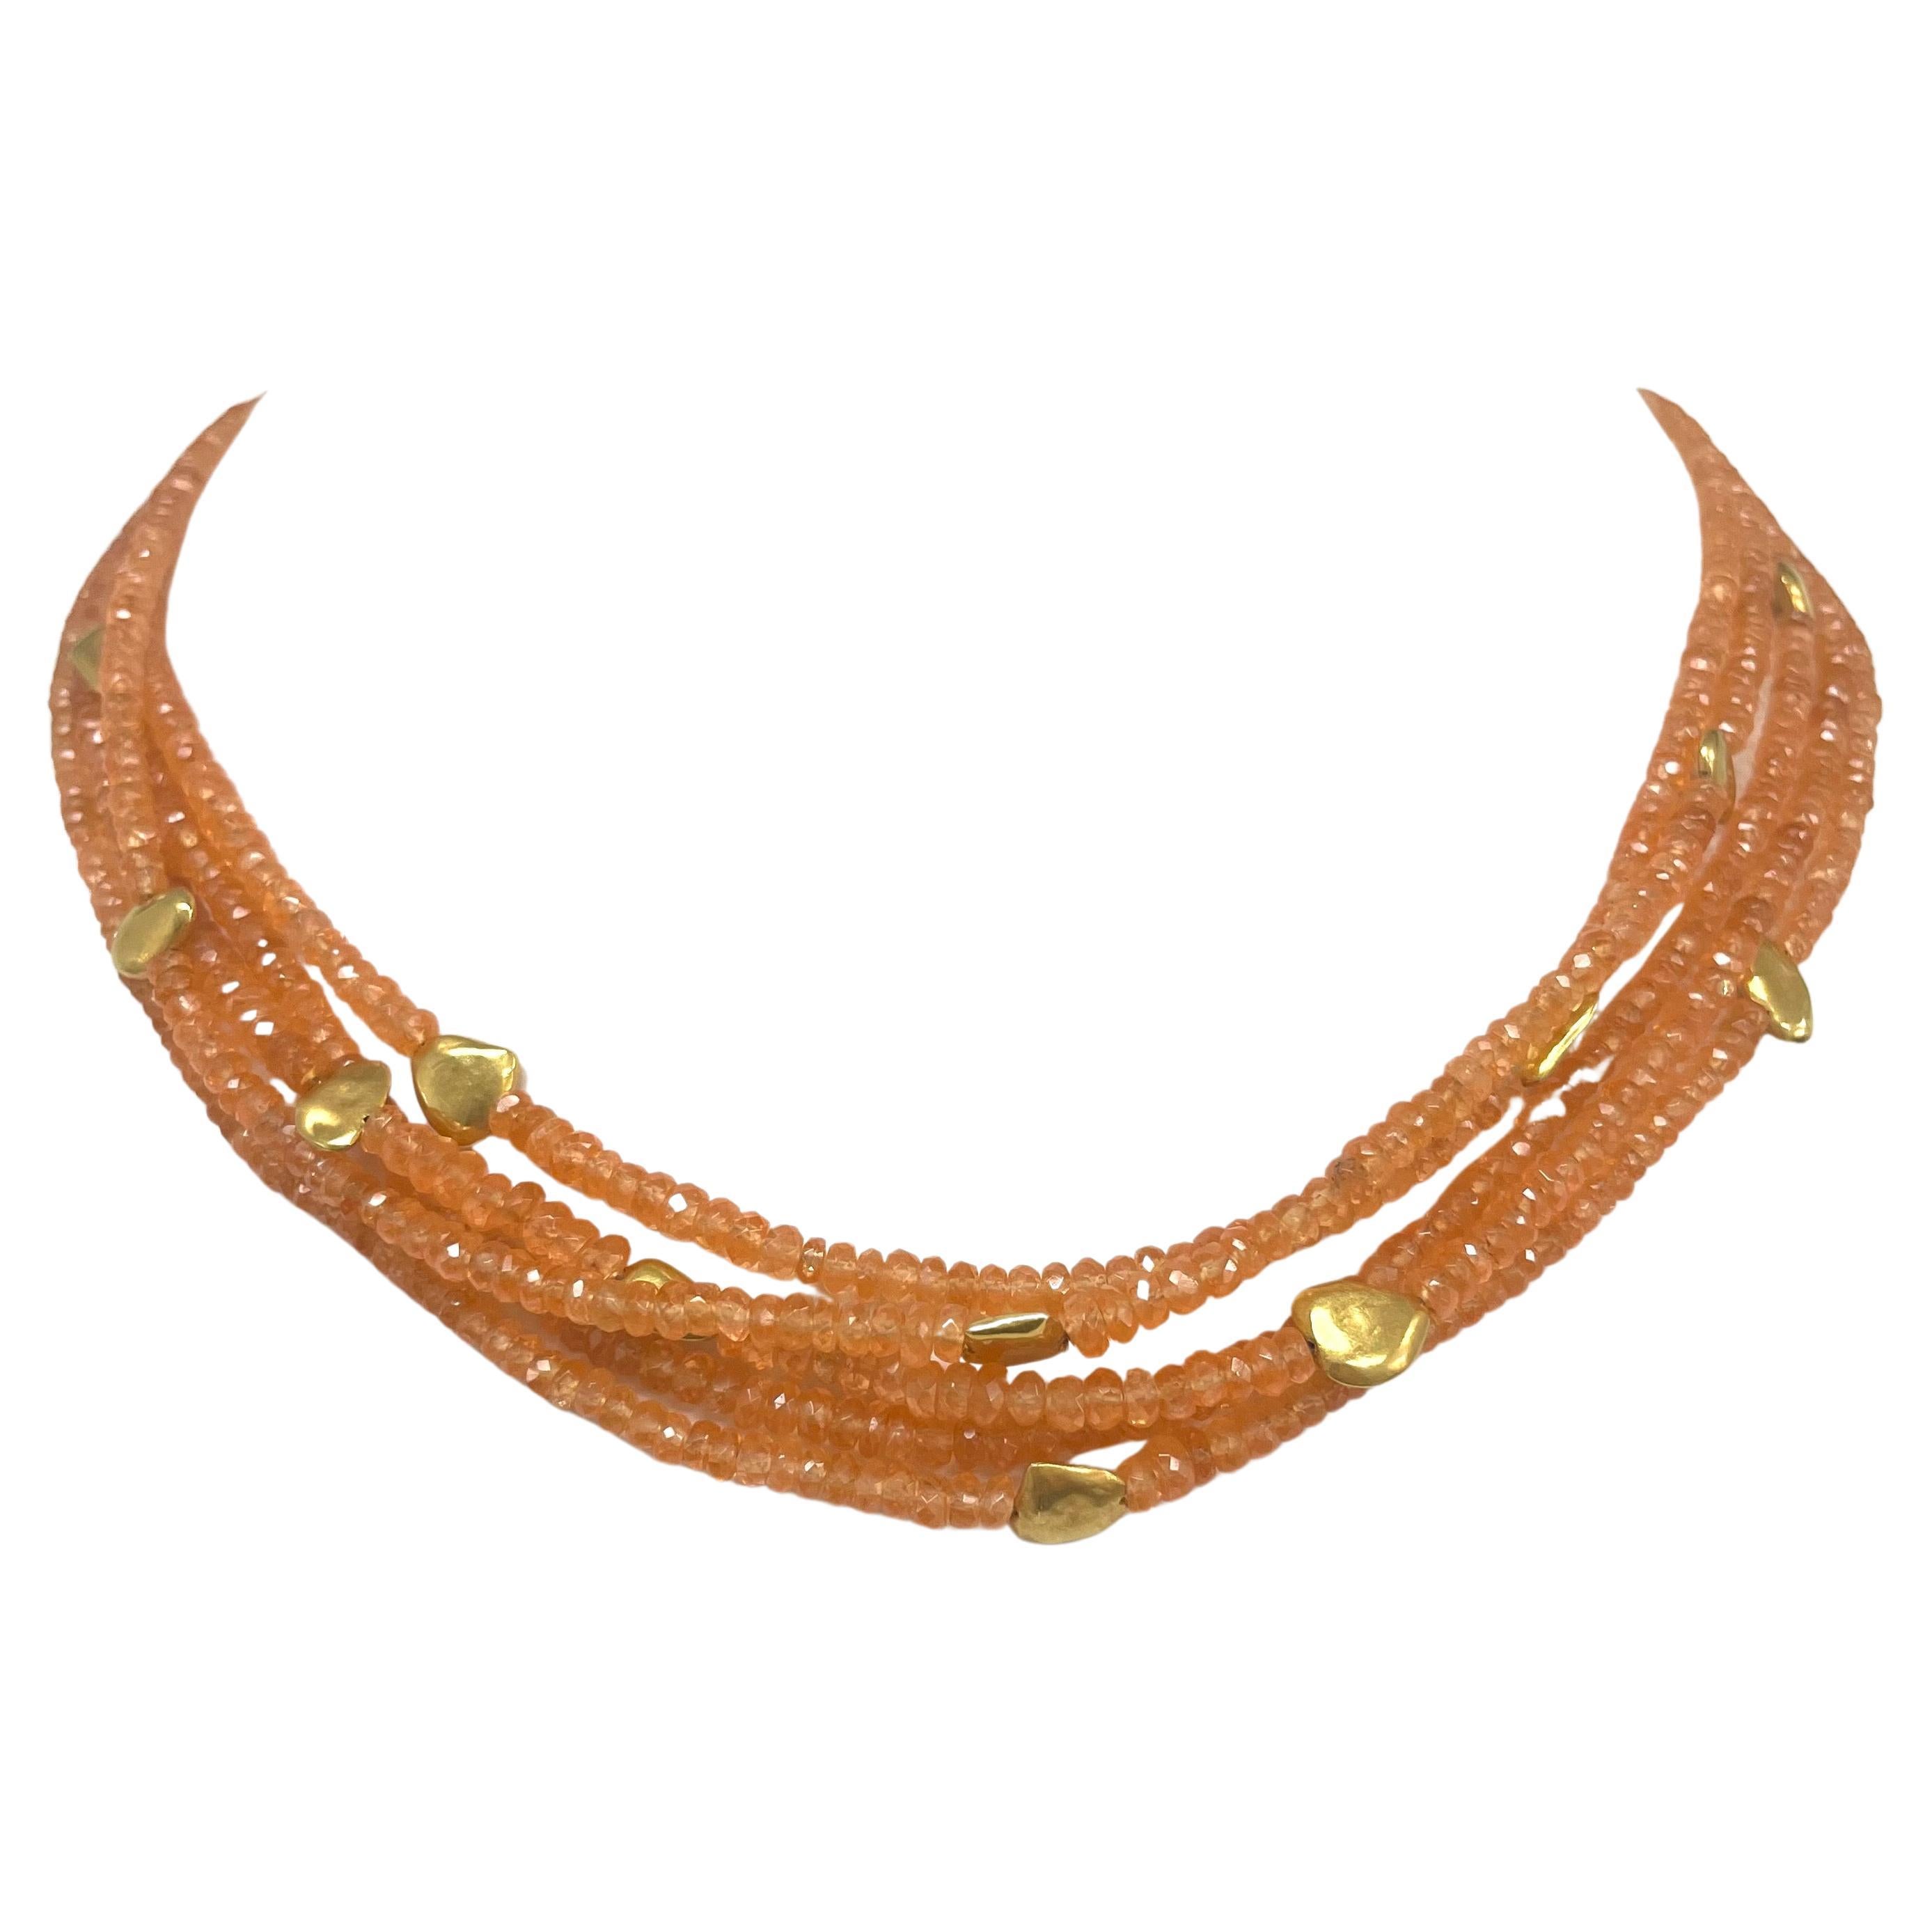  230 Carats Orange Spessartite Necklace with Gold Slices  For Sale